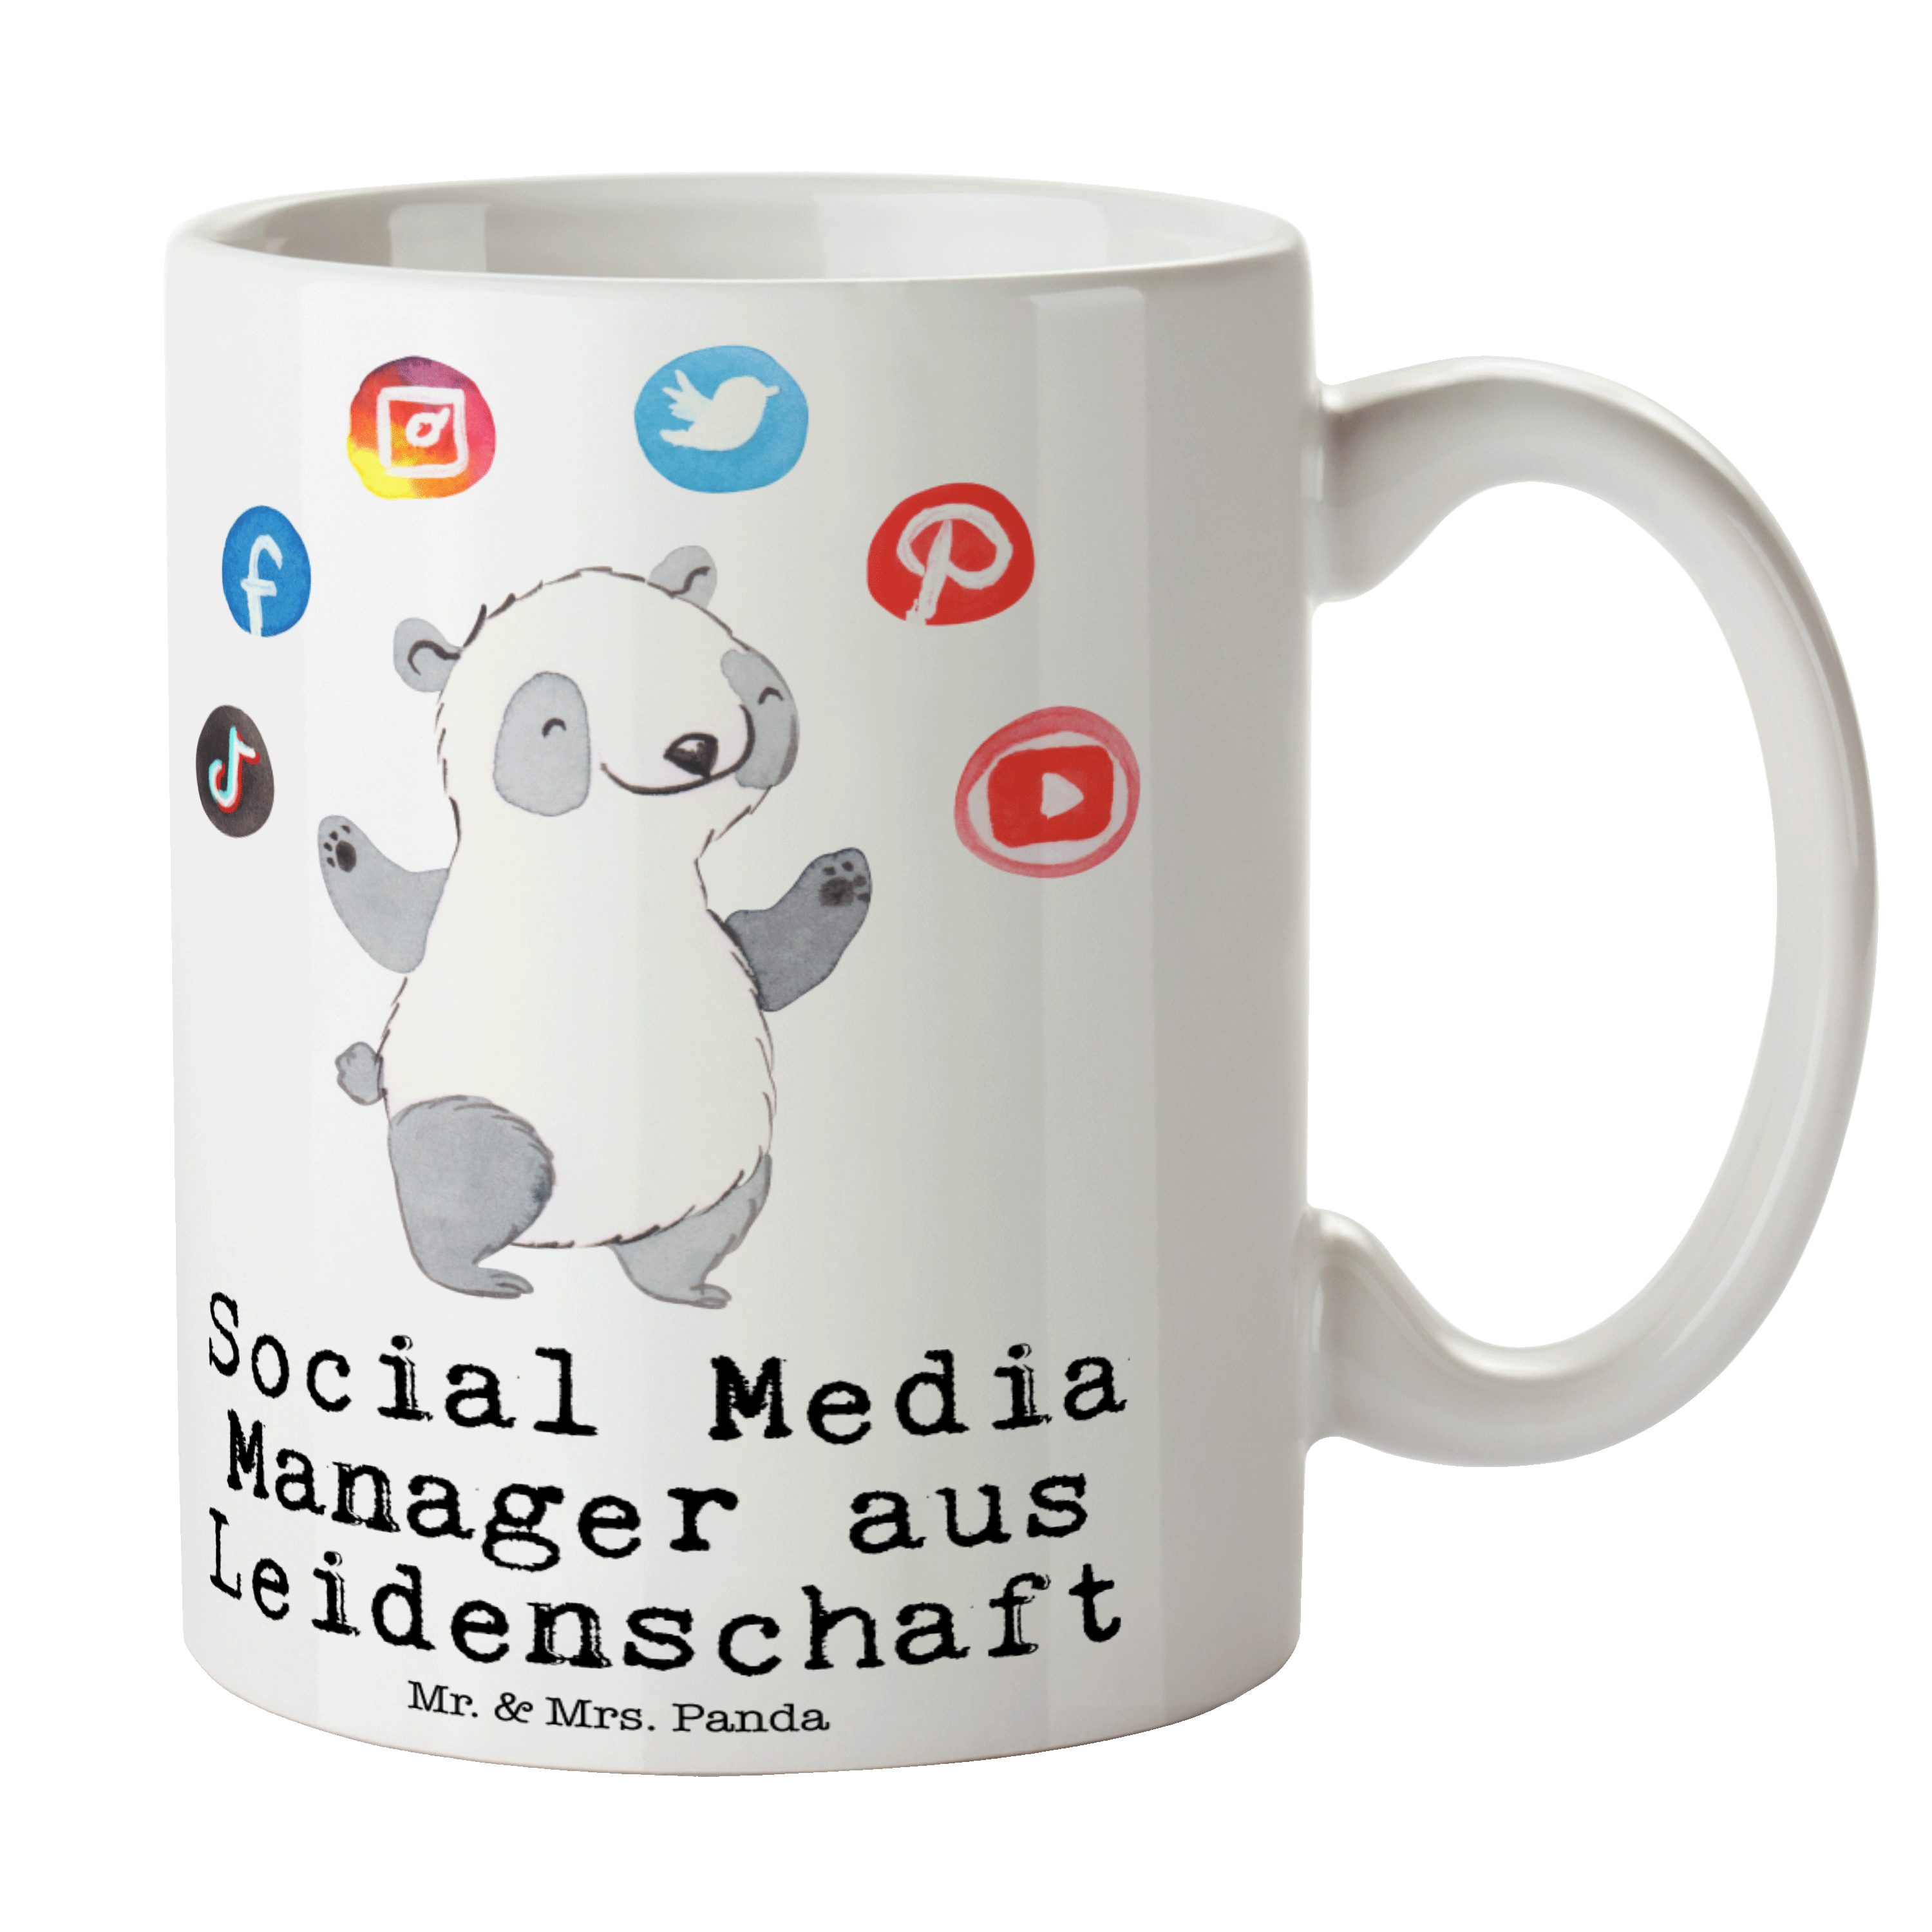 Mr. & Mrs. Media Tasse, Tasse aus Manager - Leidenschaft Geschenk, - Keramik Social Ausbi, Weiß Panda